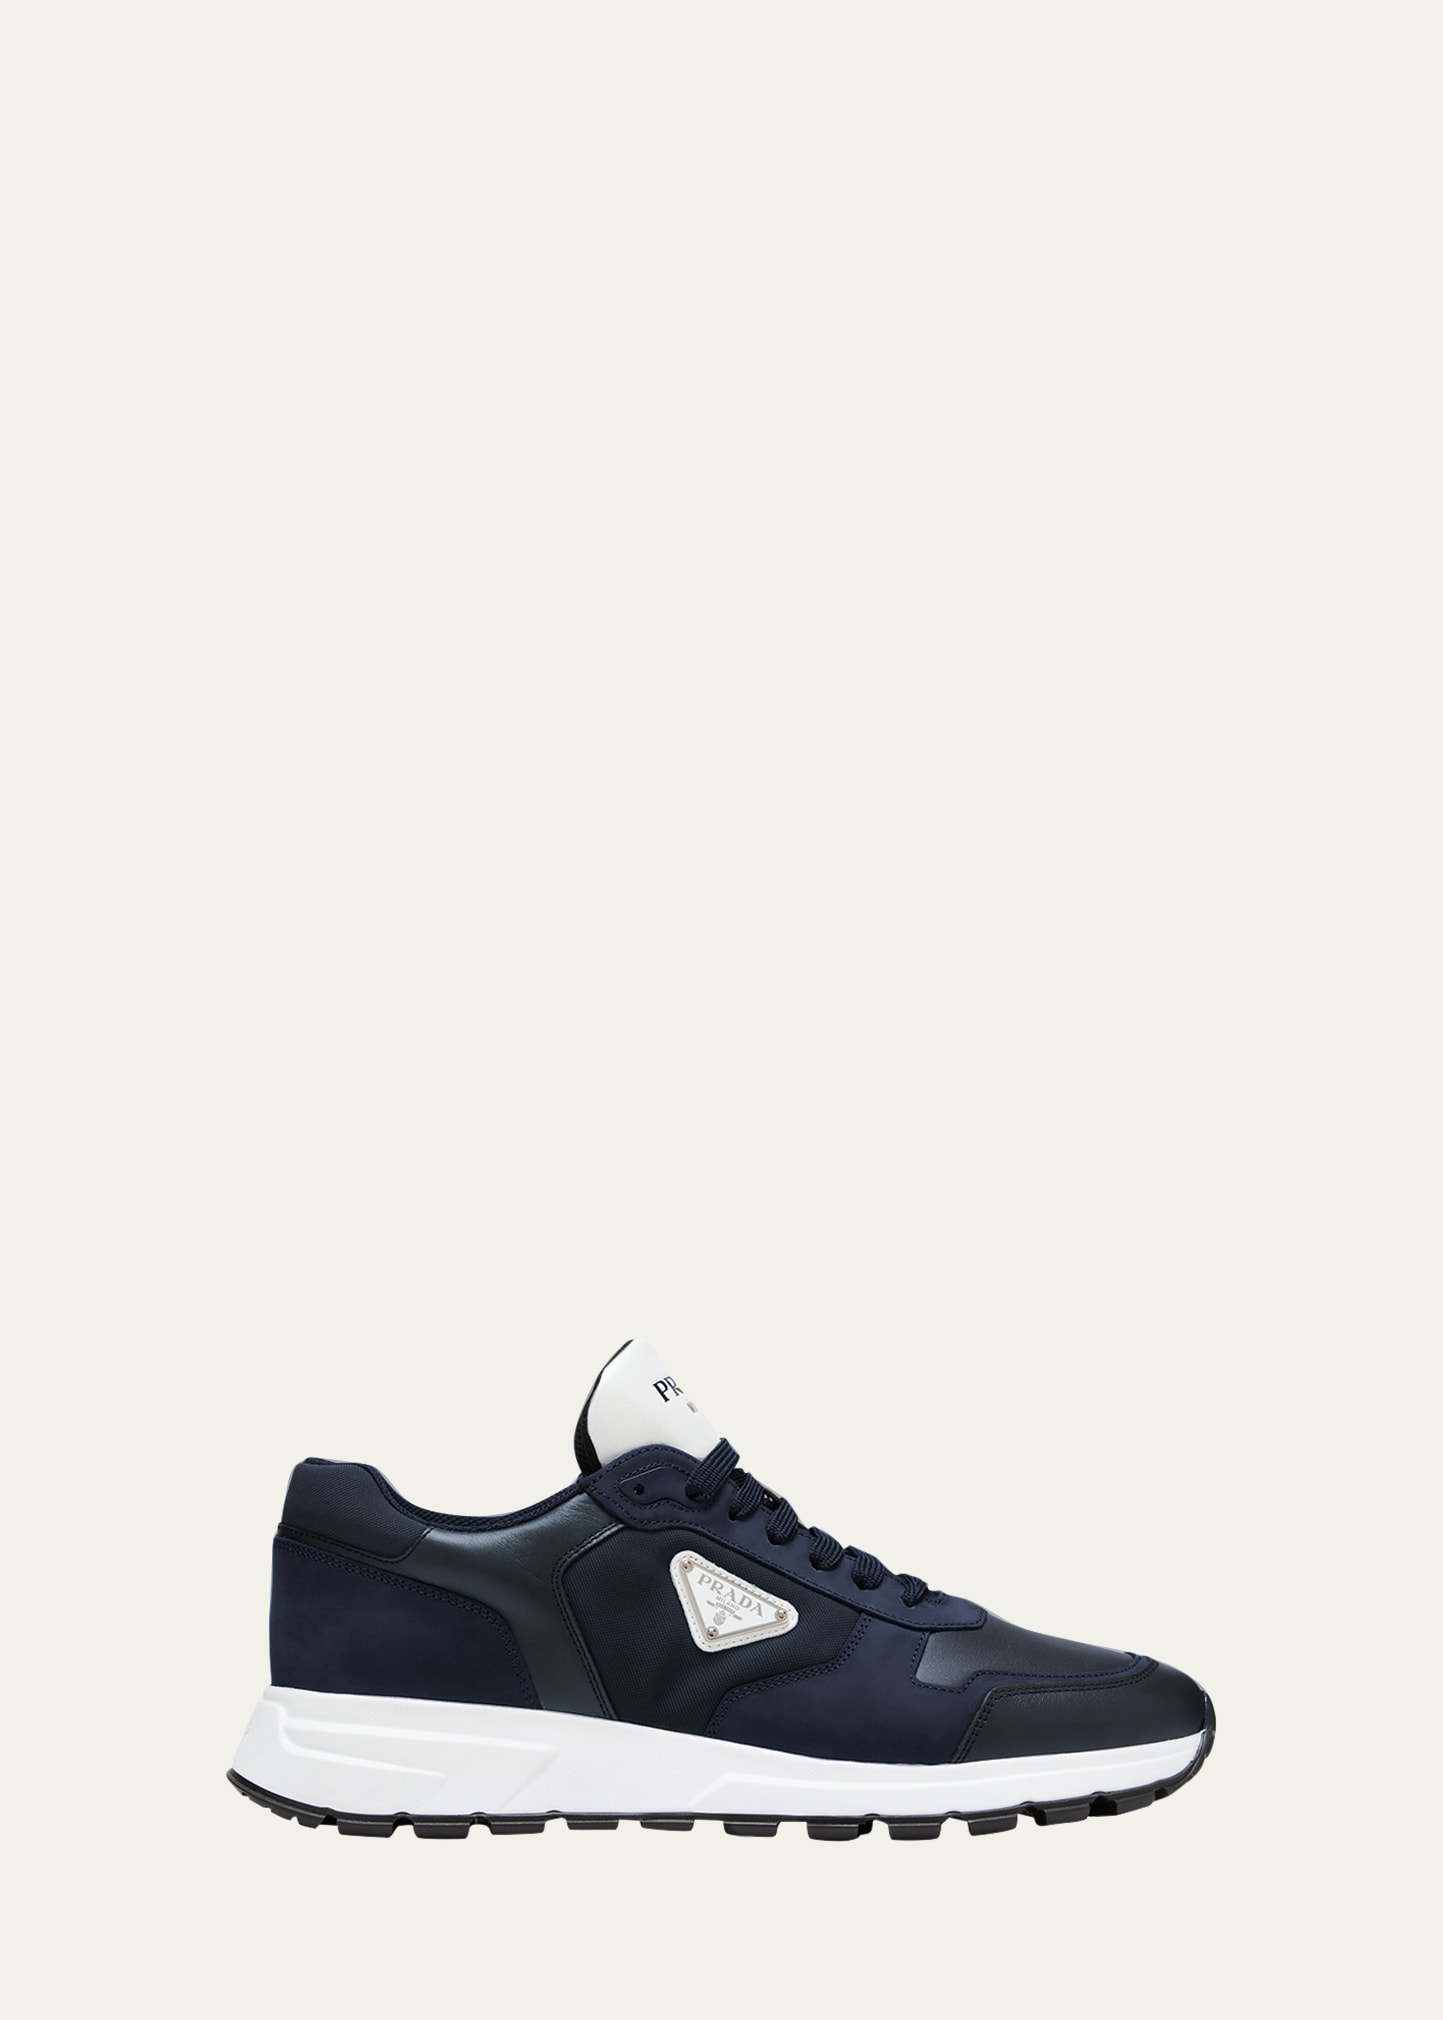 Prada Men's Prax Nubuck Leather And Nylon Runner Sneakers In Black